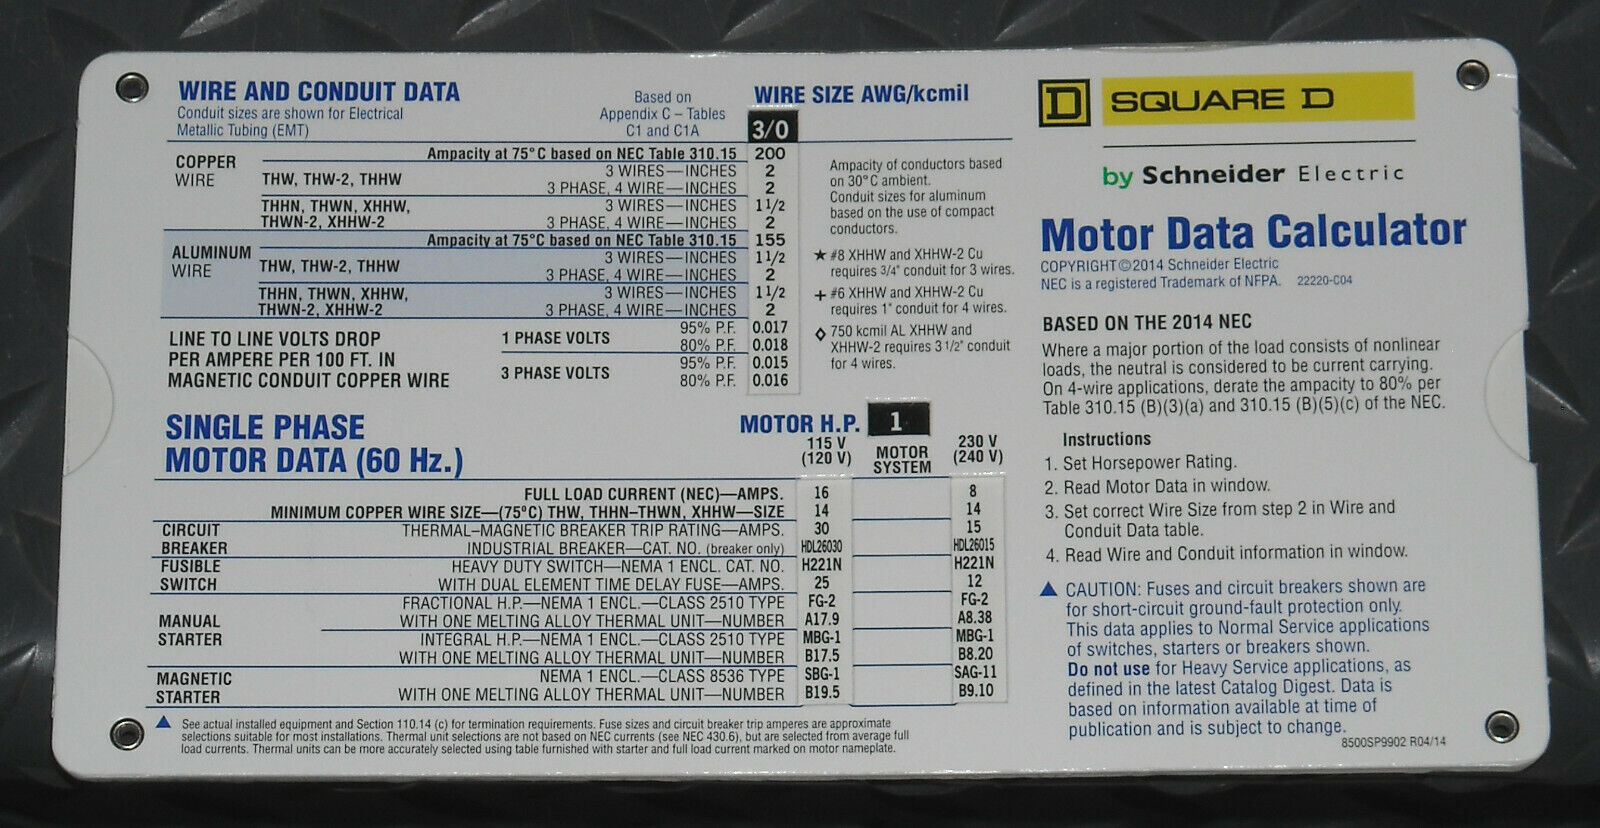 Brand New Square D Motor and Transformer Data Calculator 2014 NEC